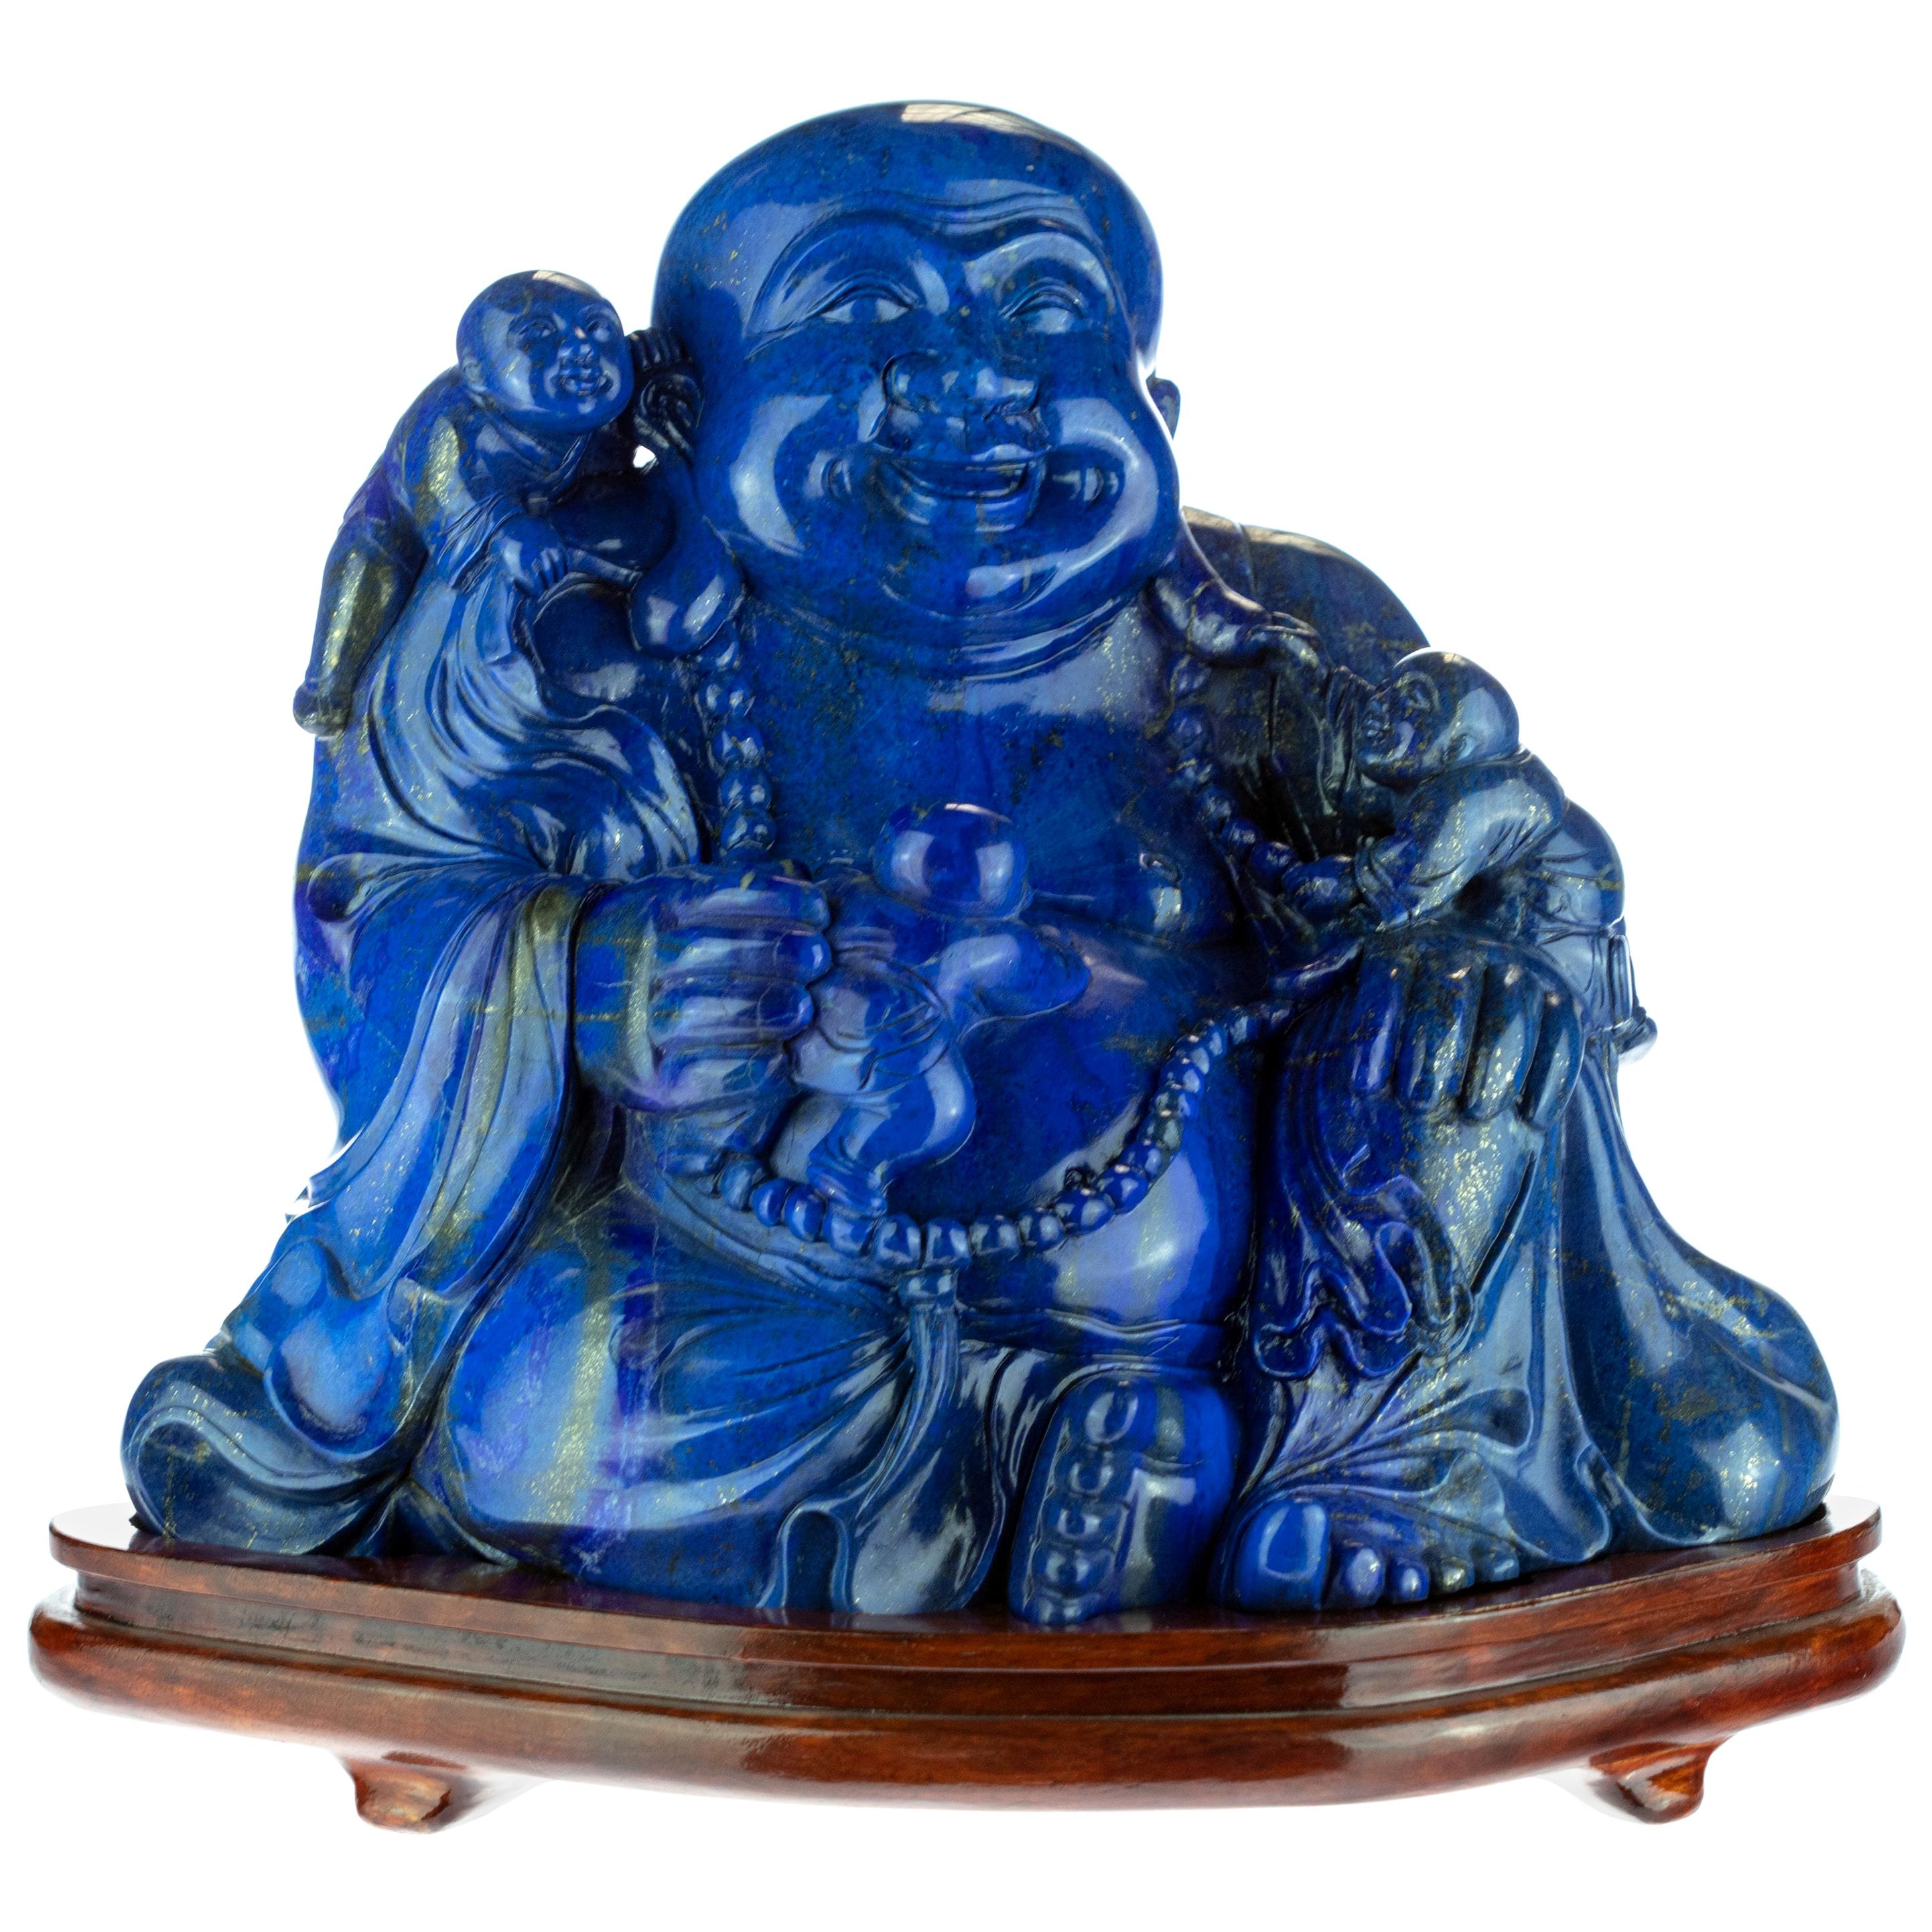 Lapis Lazuli Natural Laughing Buddha Carved Gemstone Asian Art Statue Sculpture